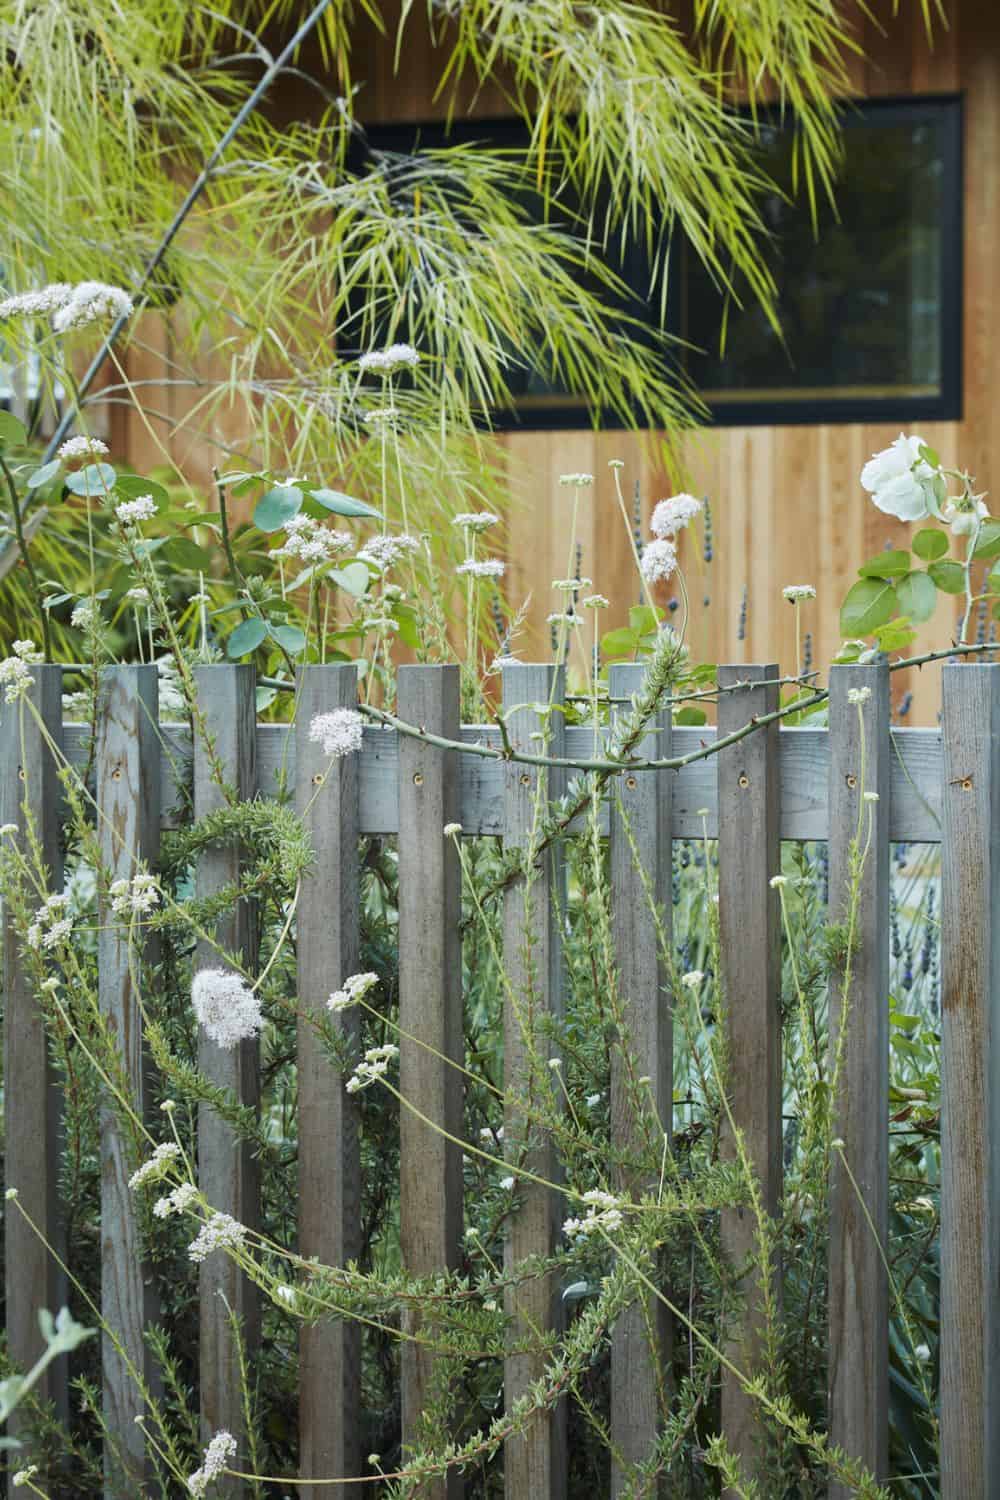 cedar wood modern picket fence with flowers growing around it